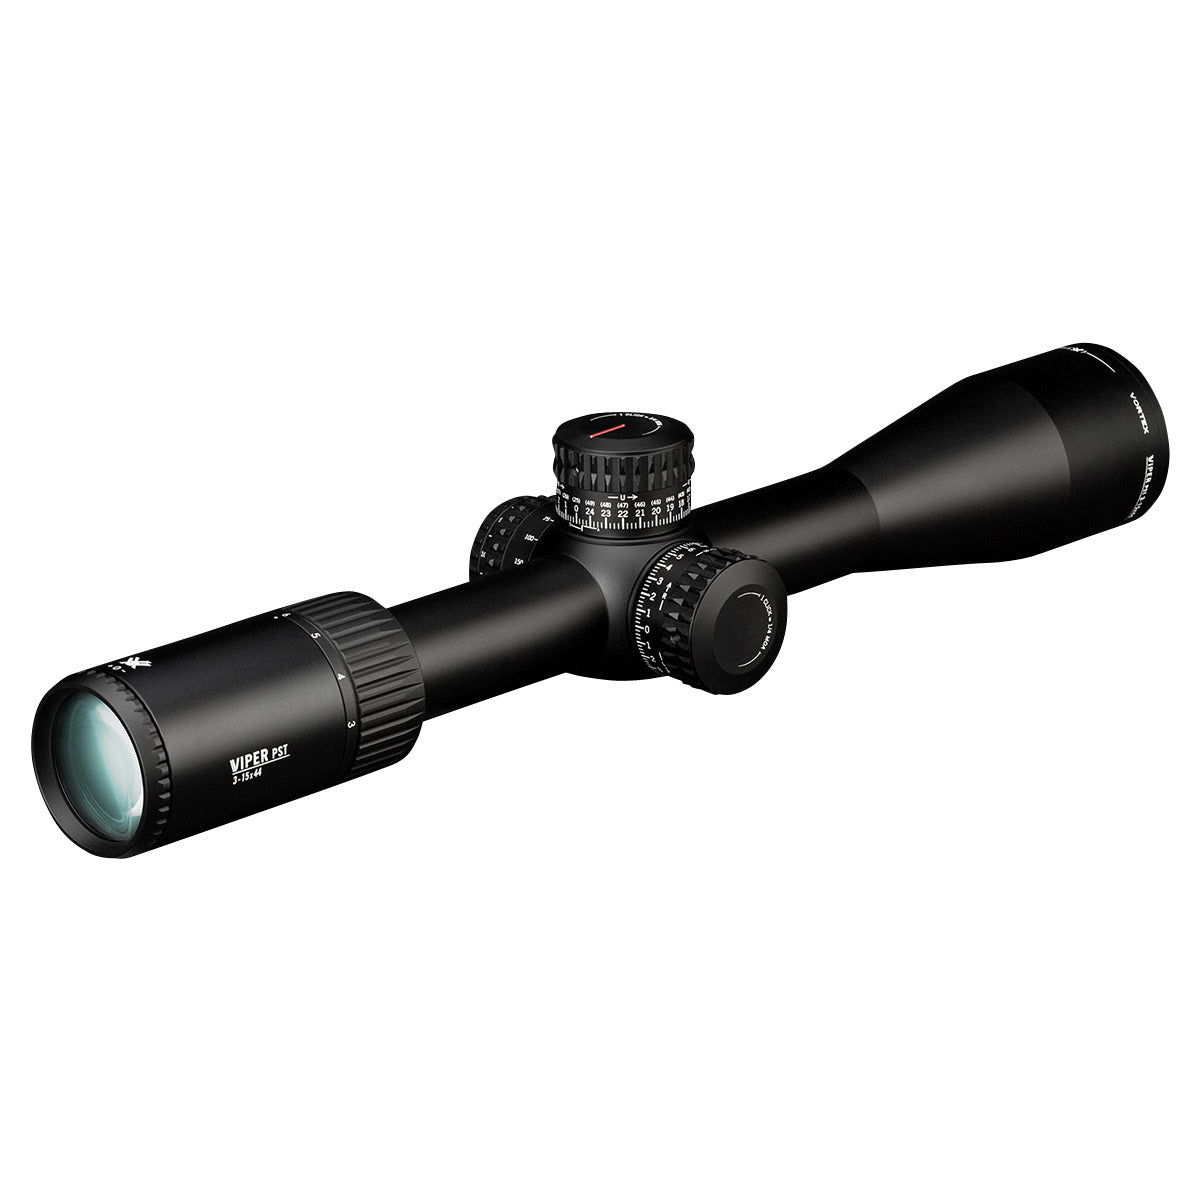 Vortex Viper PST Gen II 3-15x44 FFP EBR-7C MOA Riflescope by Vortex Optics | Optics - goHUNT Shop